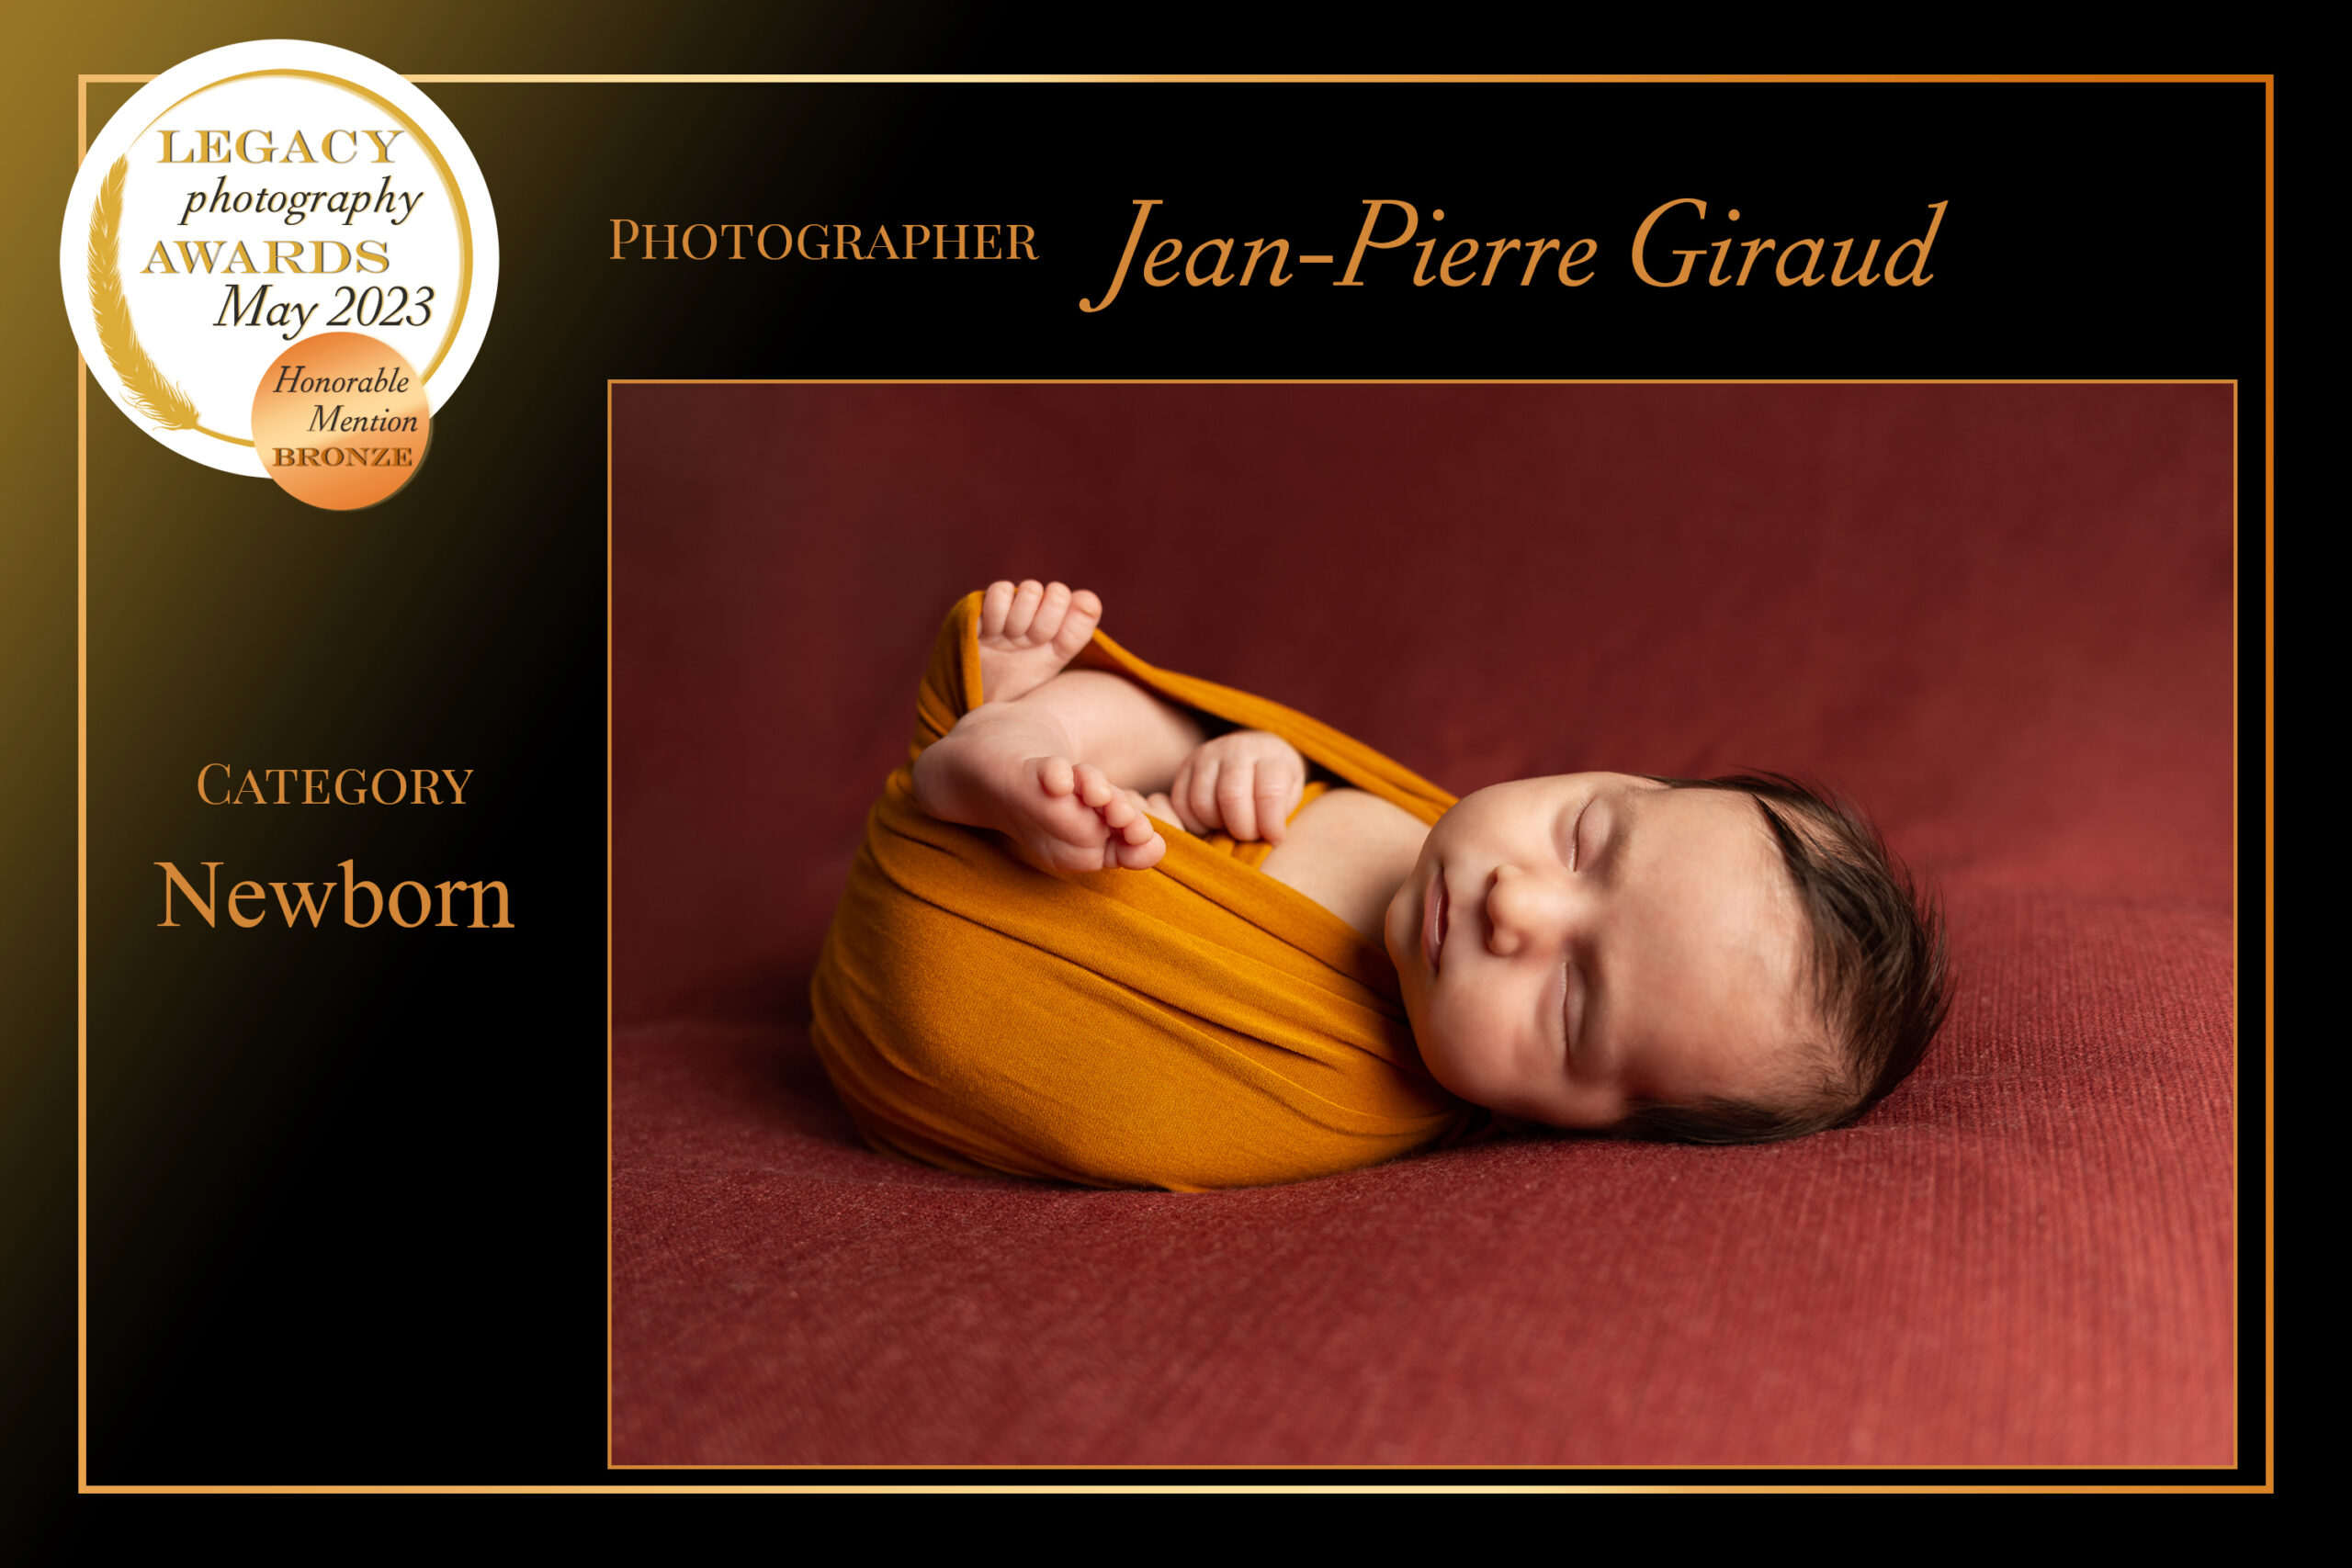 Jean-Pierre Giraud Photographies